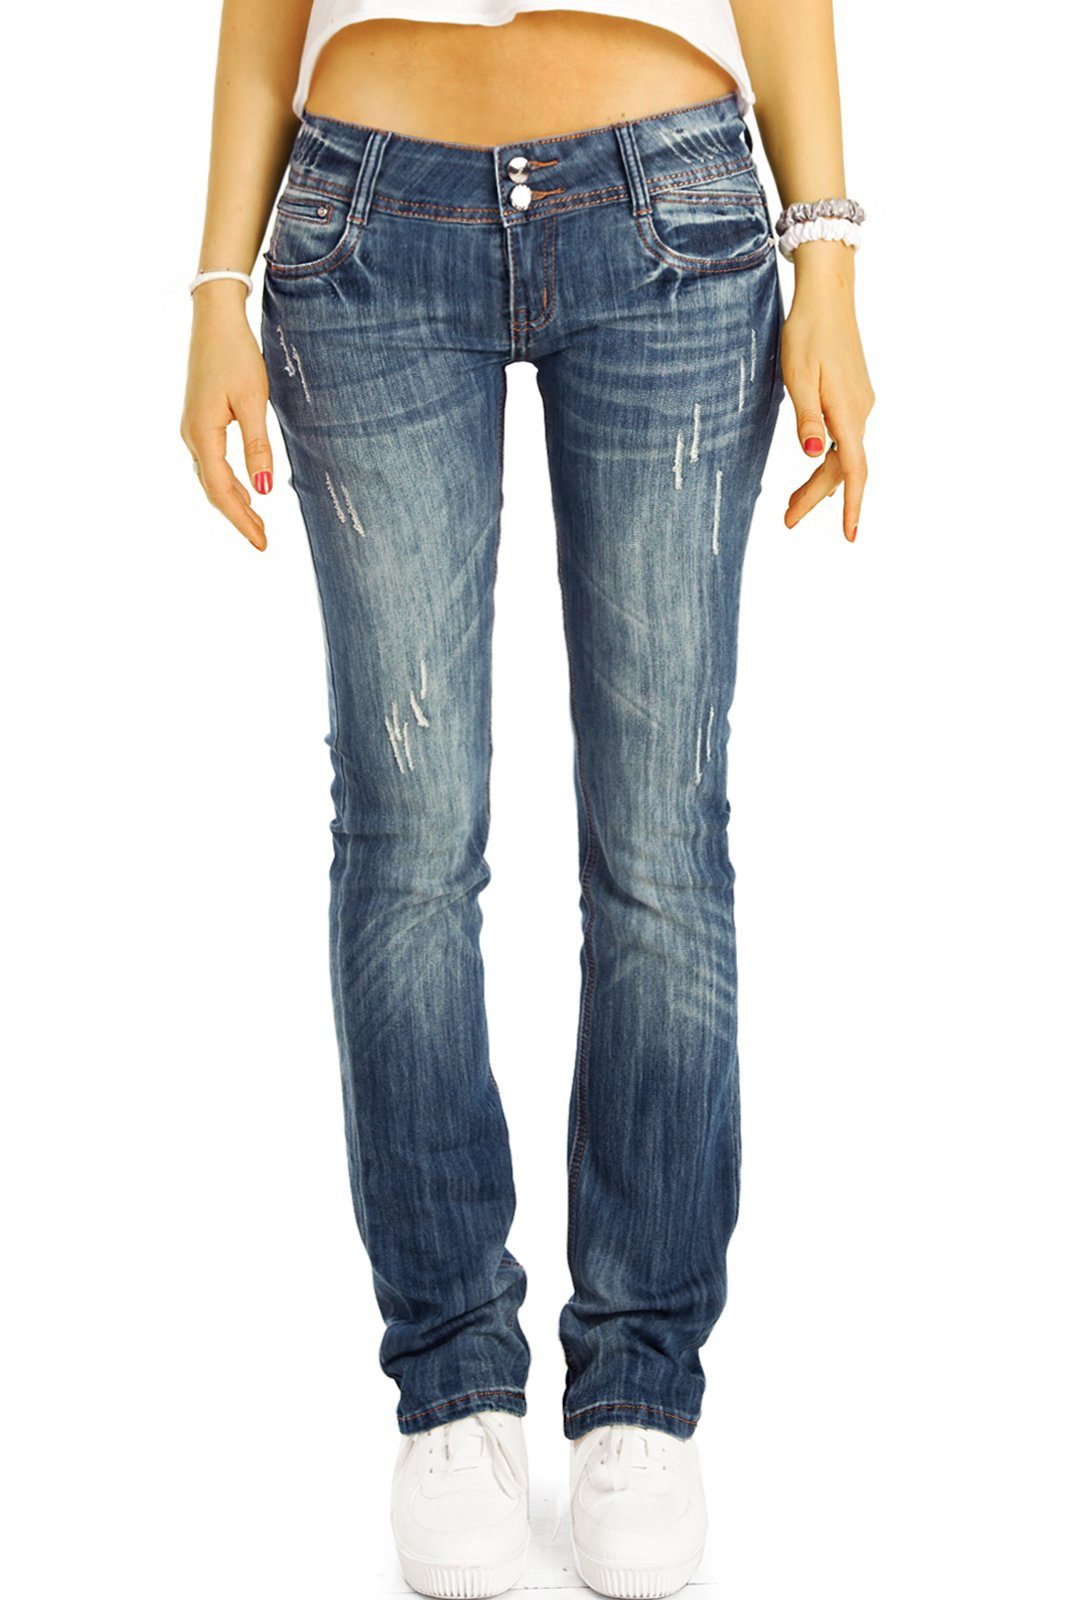 be blau Damenjeans, low geschnittene styled Hüfthose Straight-Jeans waist 5-pocket gerade j137p-straight